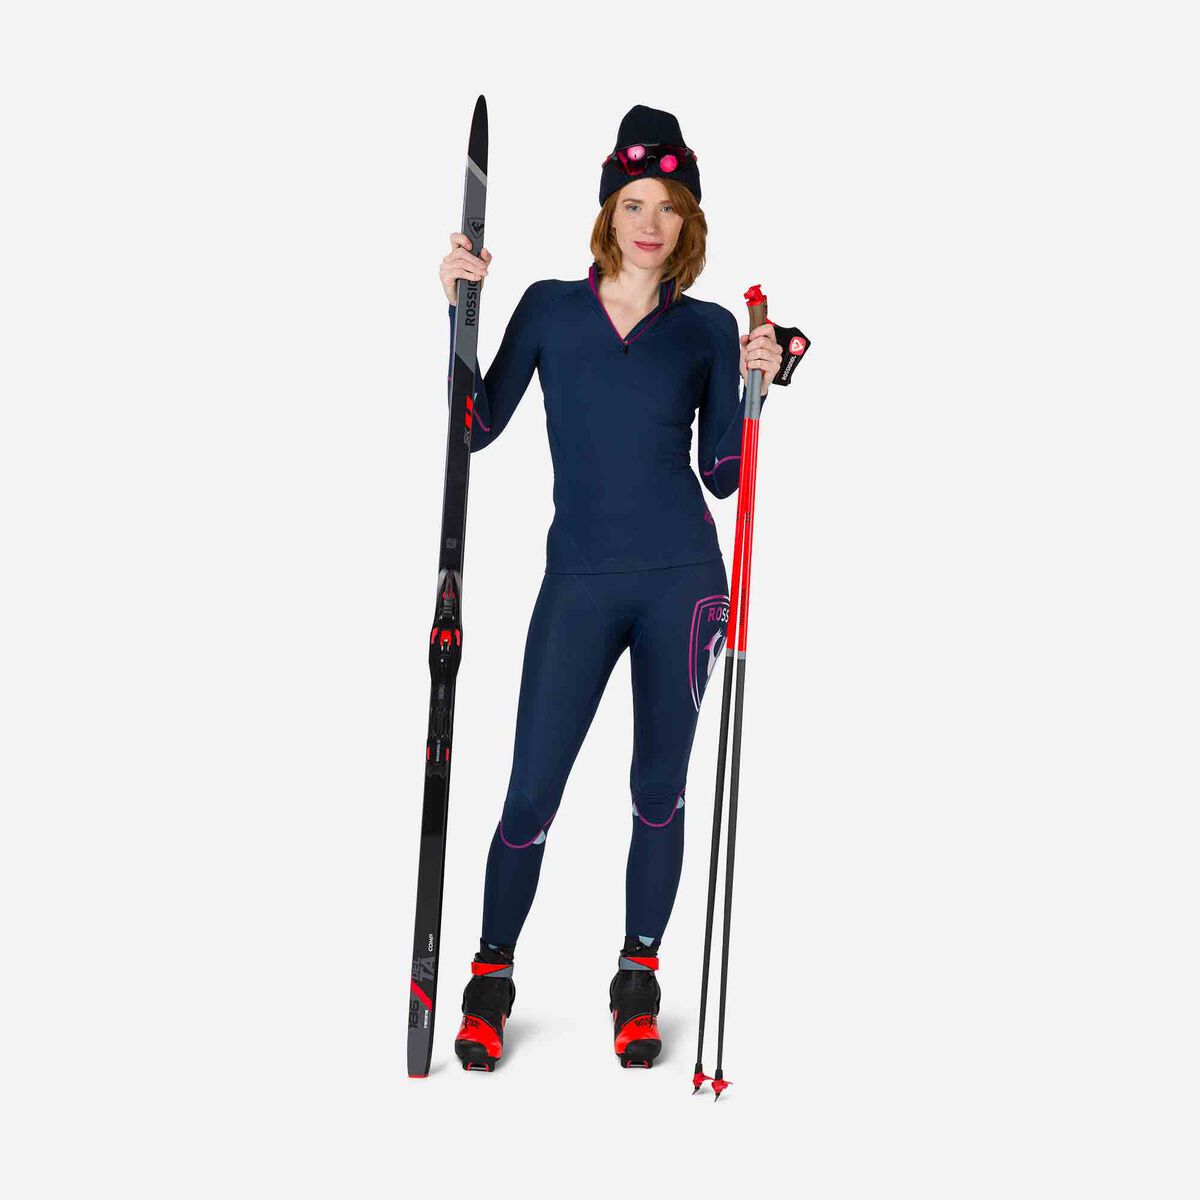 Women's Infini Compression Race Tights, Ski pants